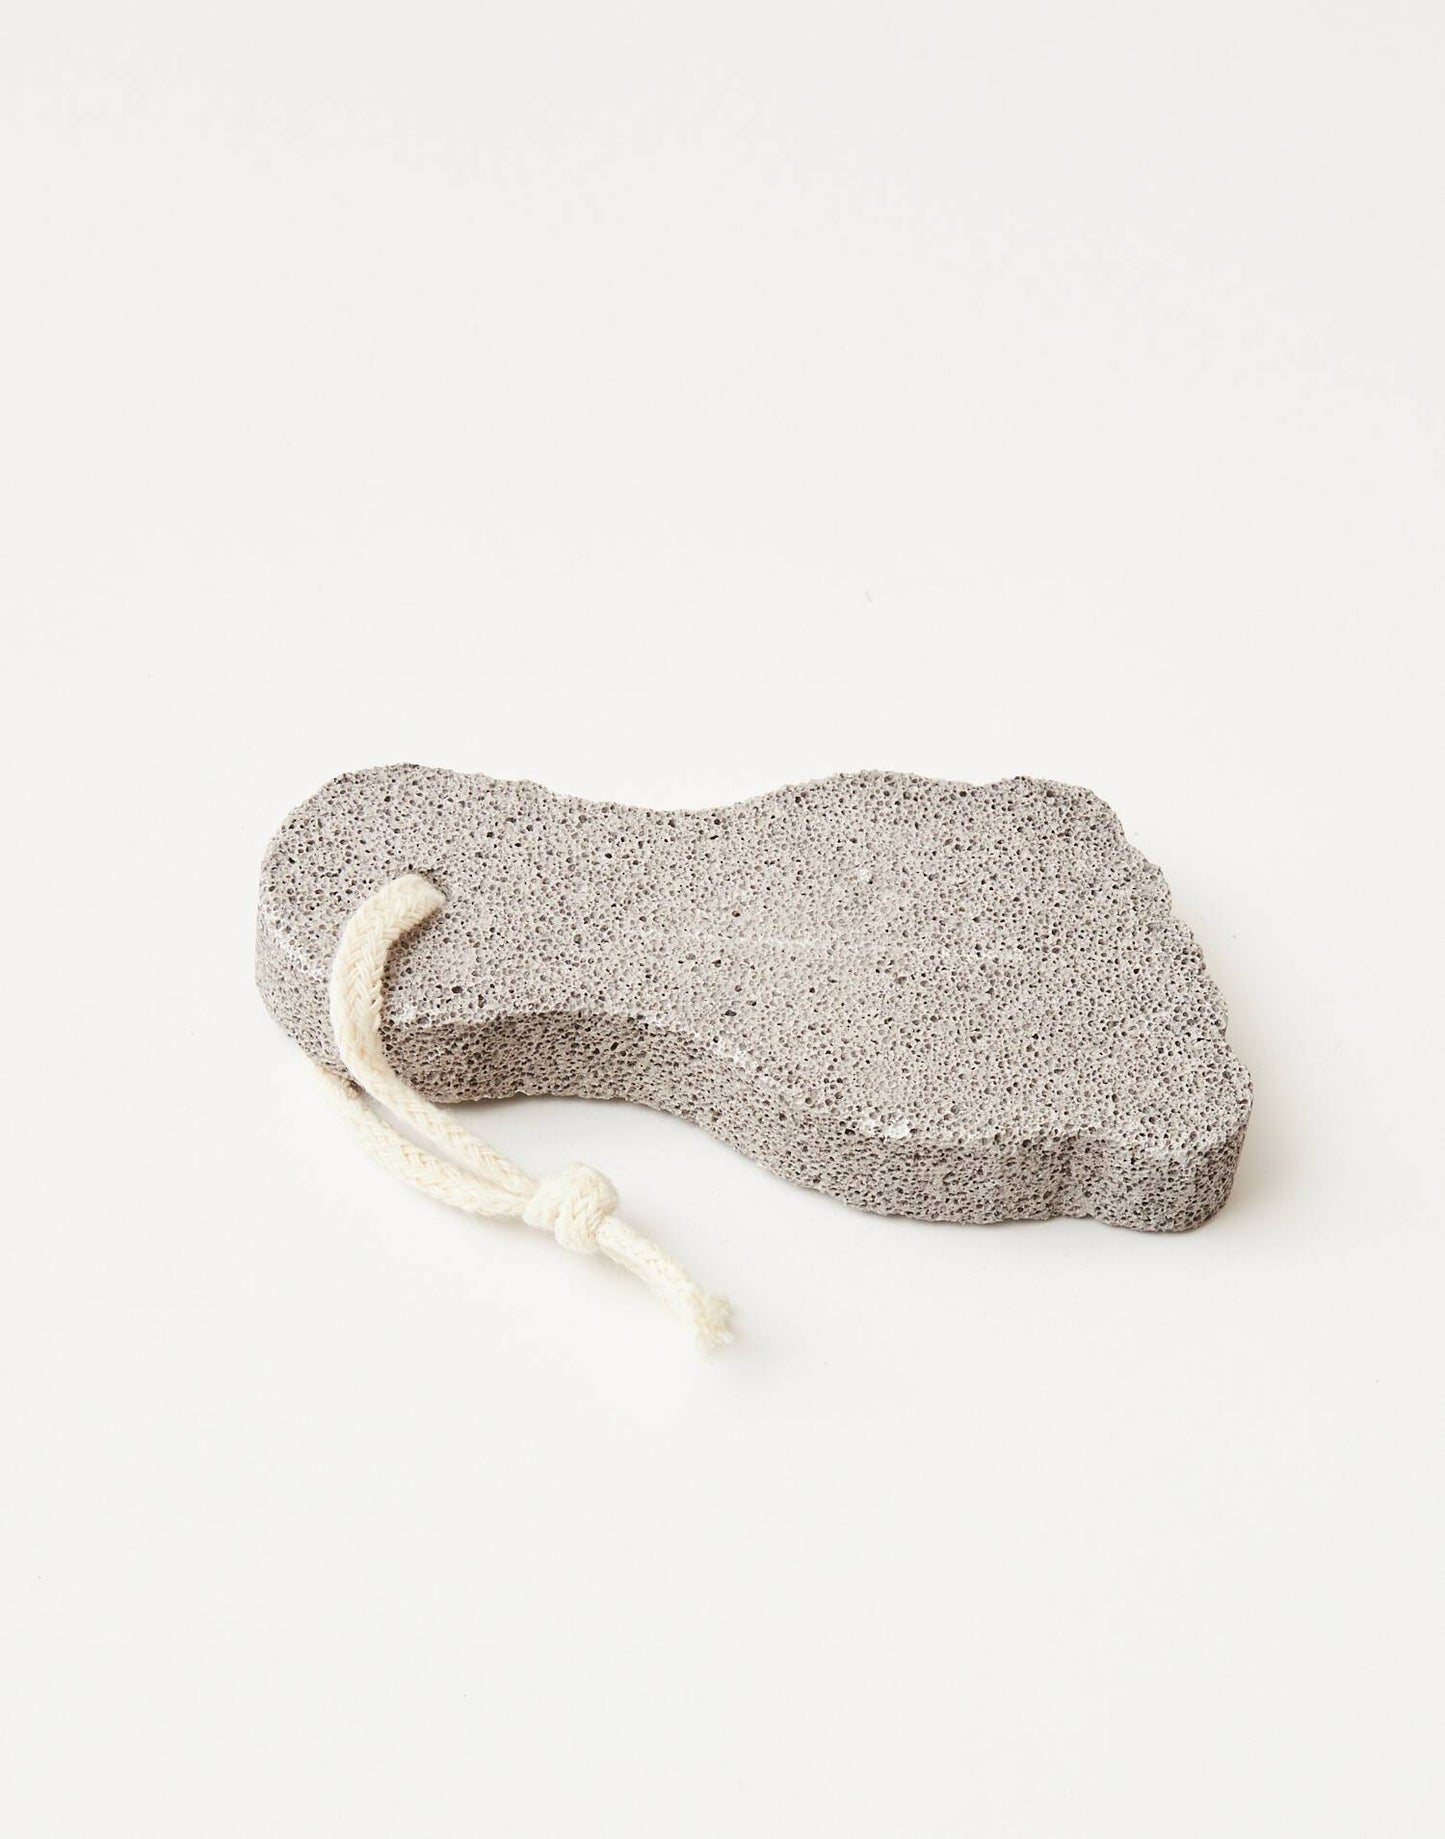 Foot-shaped pumice stone